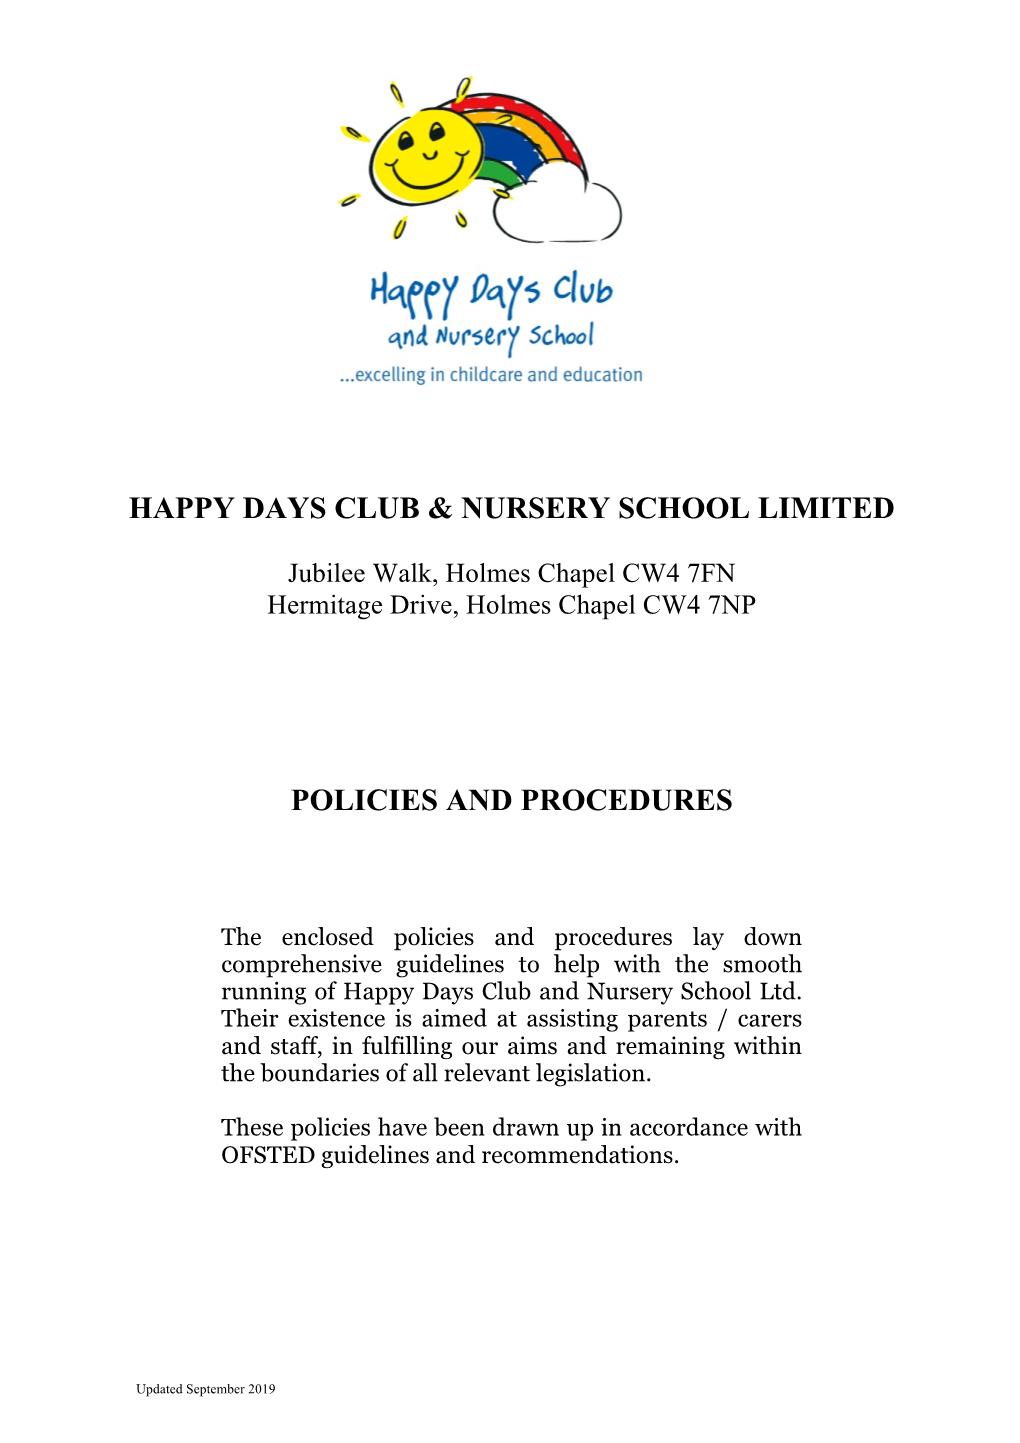 Happy Days Club & Nursery School Limited Policies And